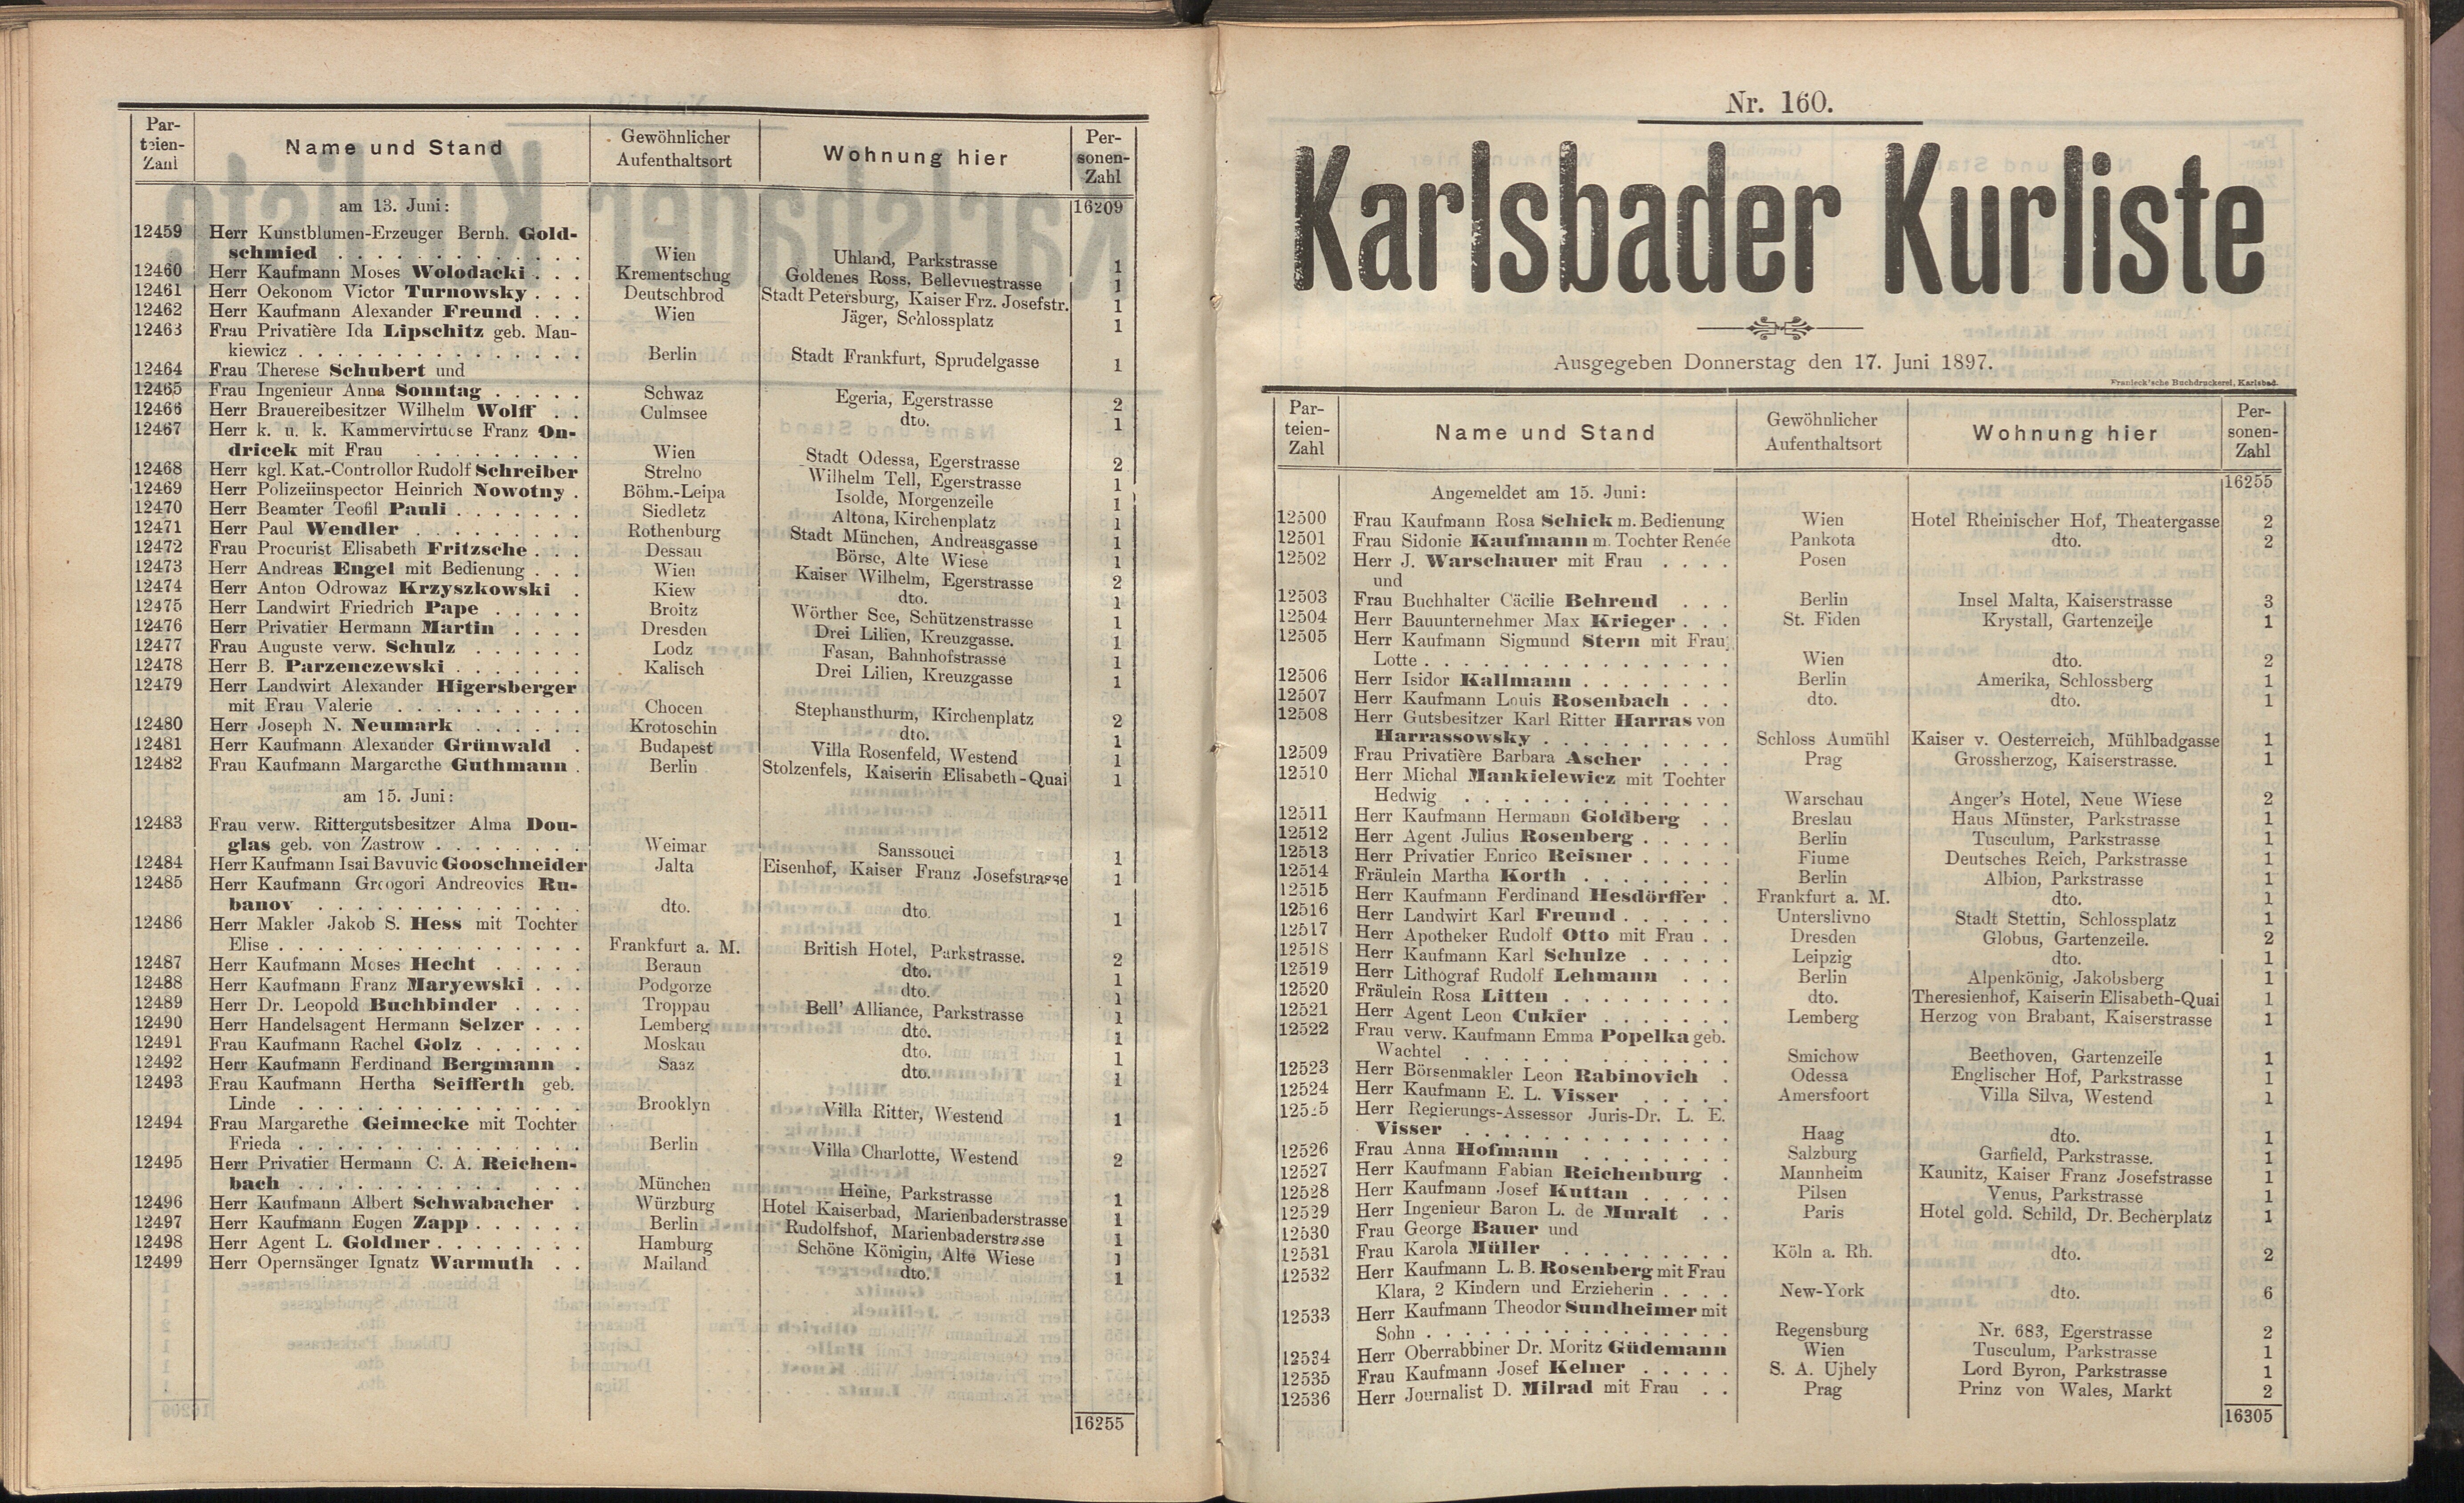 176. soap-kv_knihovna_karlsbader-kurliste-1897_1770